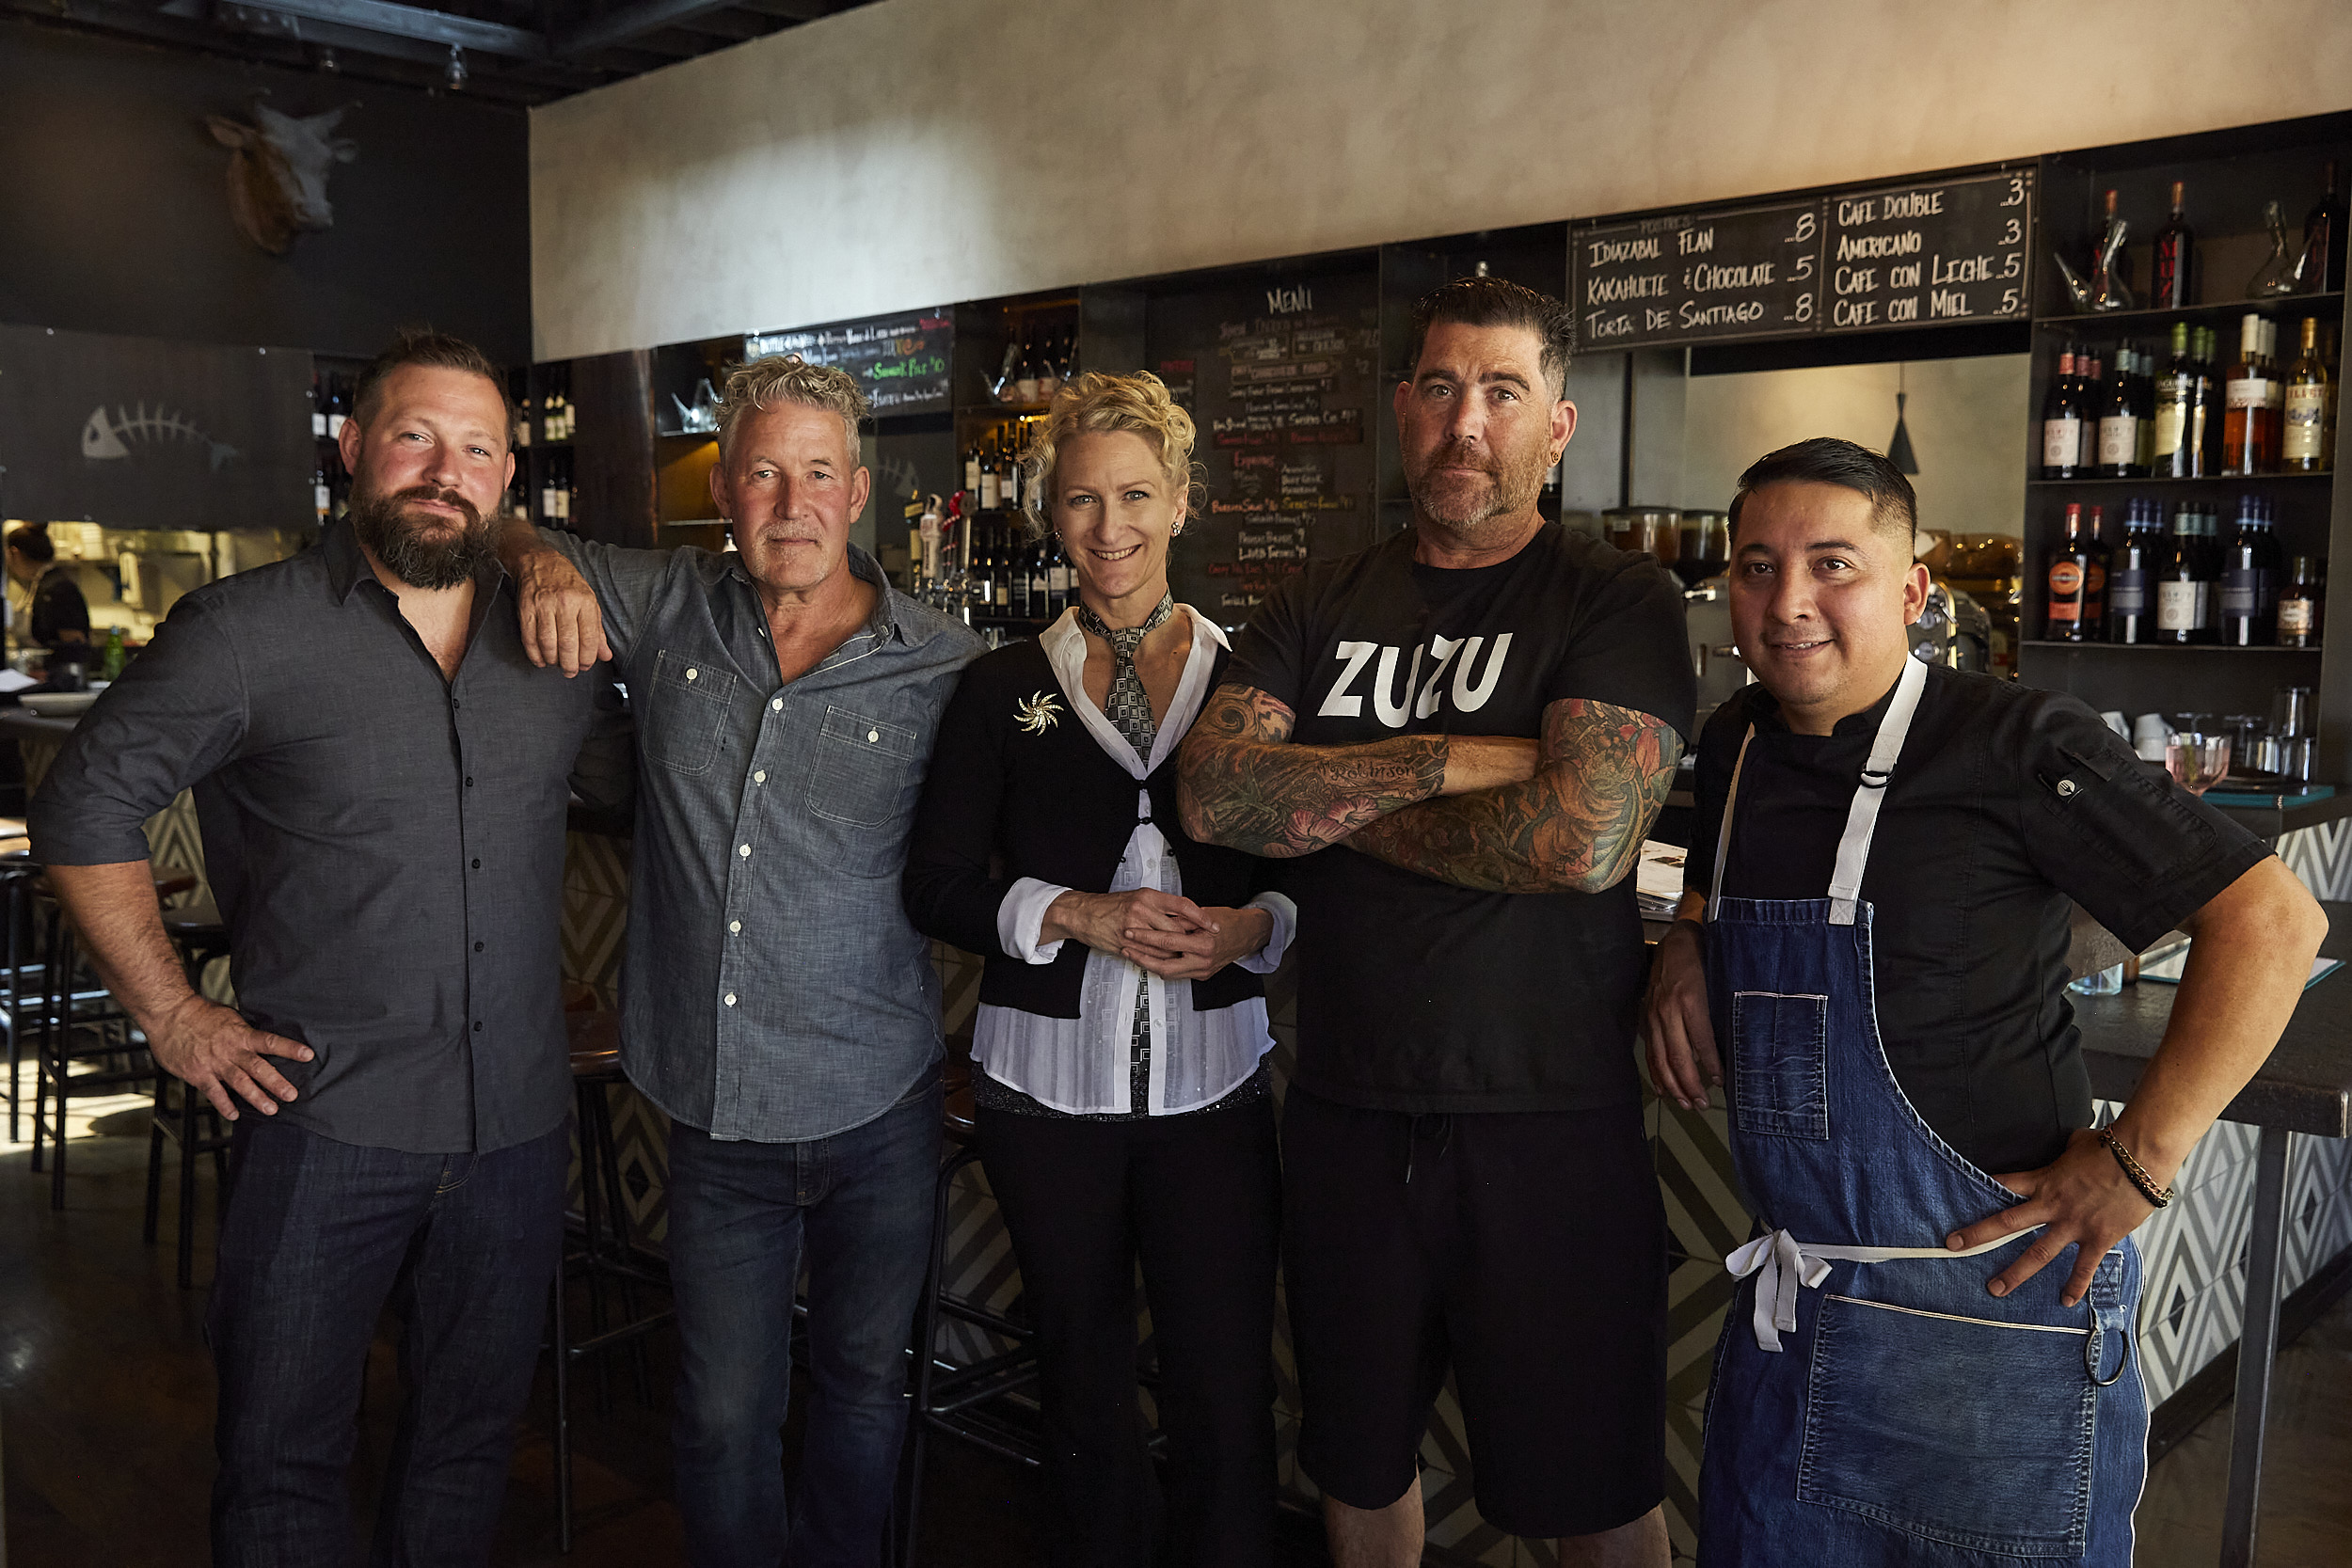 The ZuZu team includes: Josh Weed, Bar Manager; Mick Salyer, Proprietor; Jenn Anderson, Pastry Chef + Events; Ben Robinson, Prince of Paella ; Armando Ramirez, Chef + Culinary Partner.